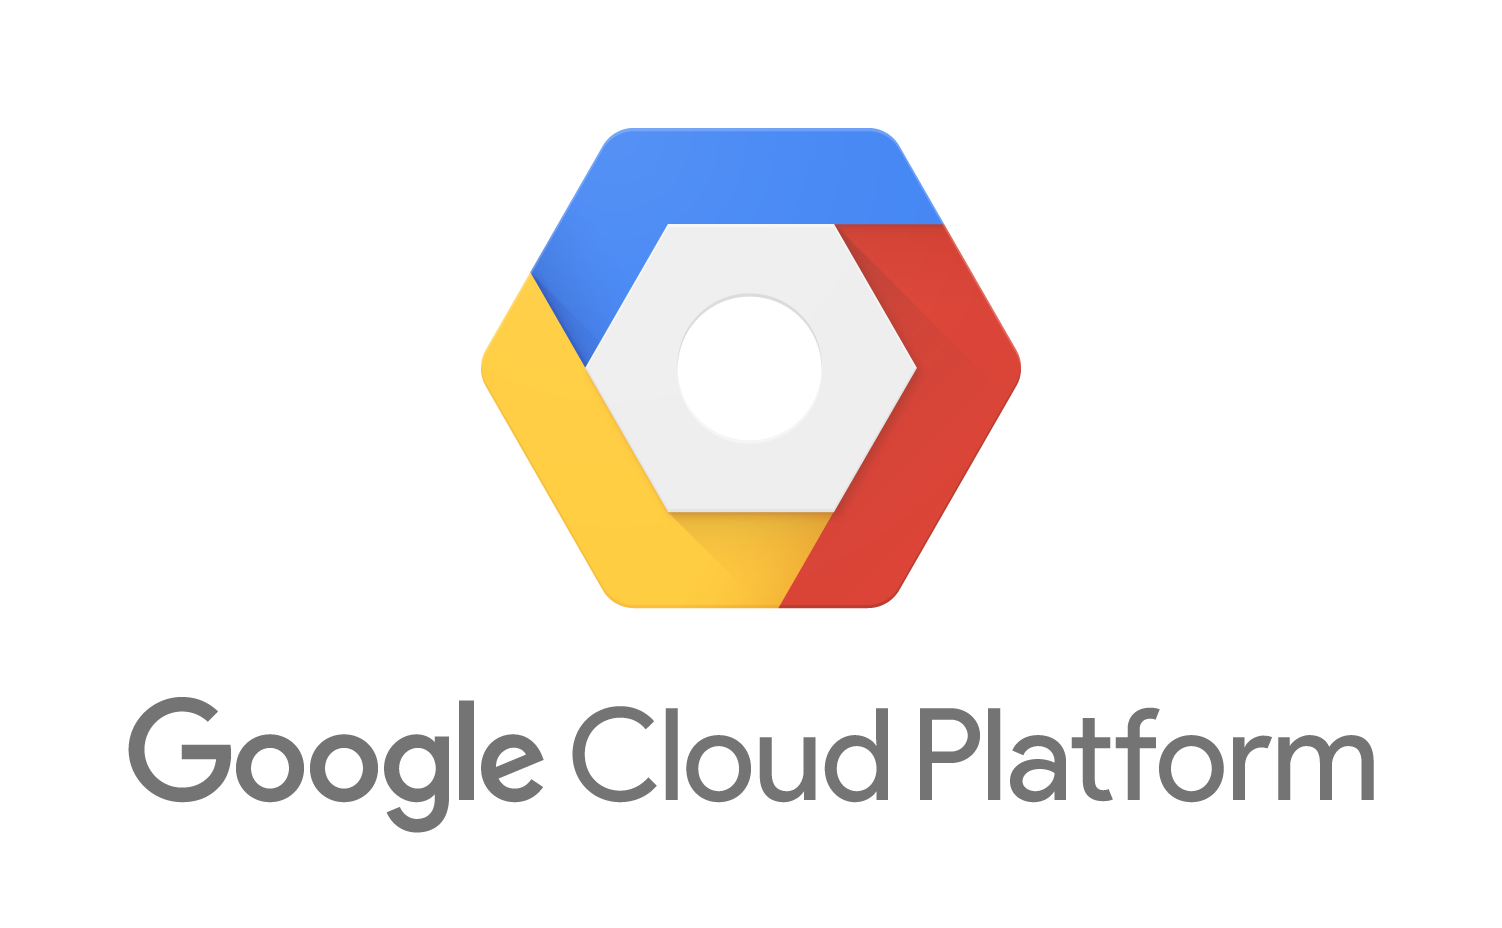 google logo shadow